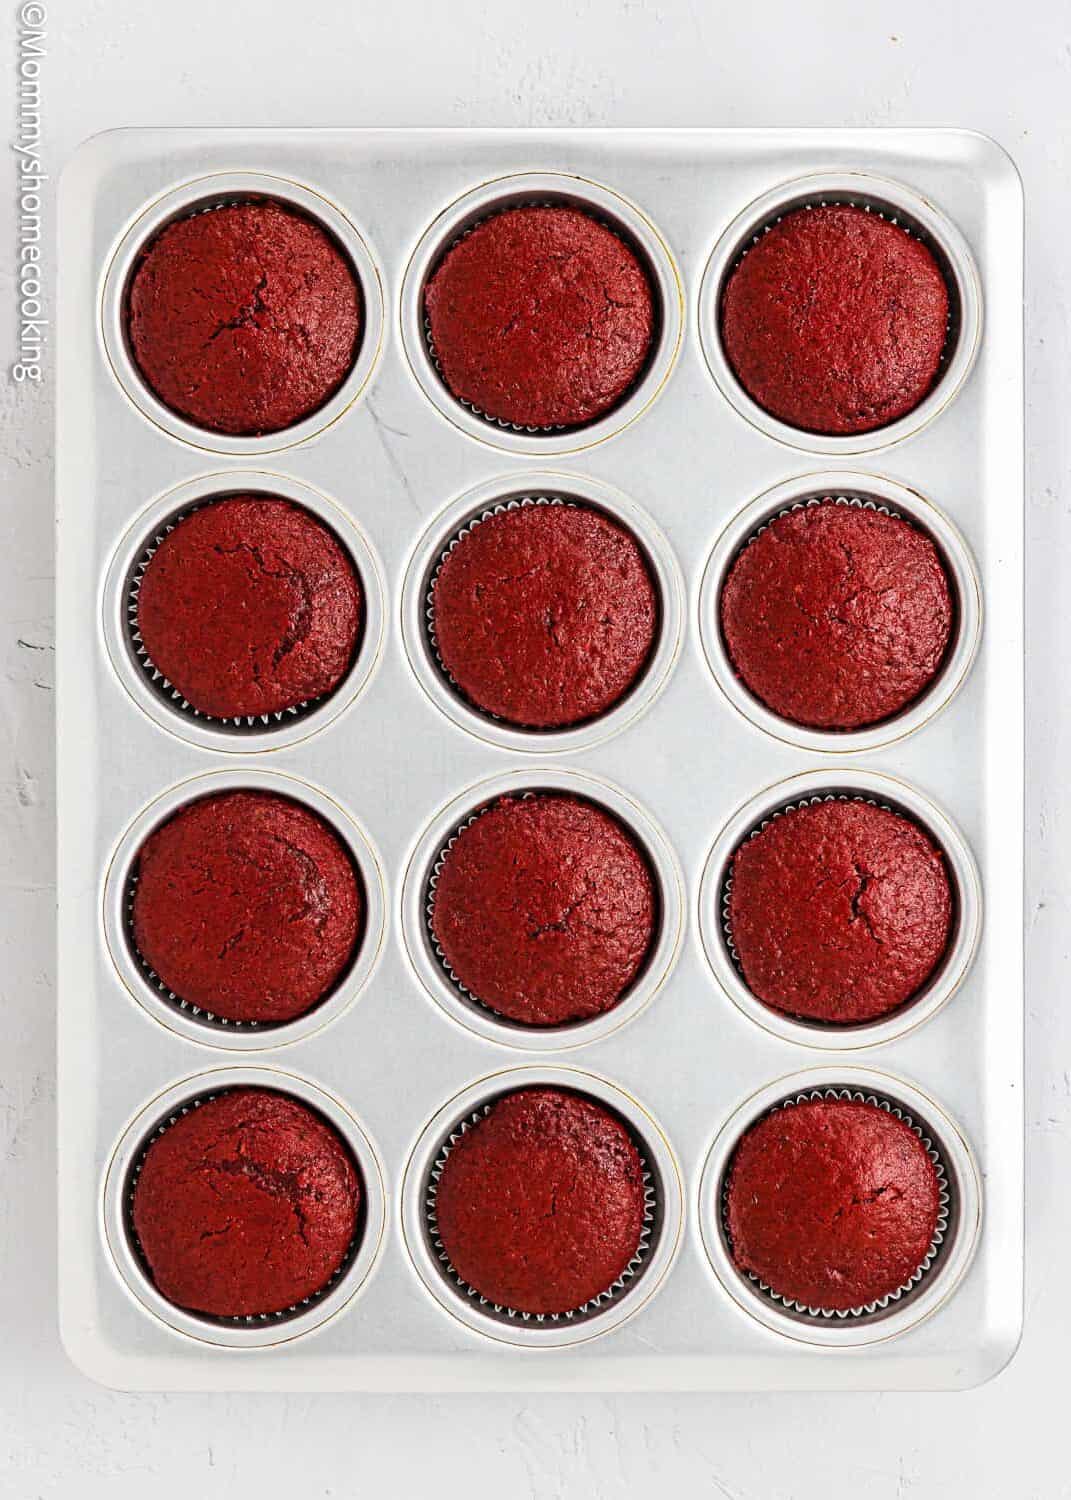 baked Vegan Red Velvet Cupcakes in a cupcake pan.